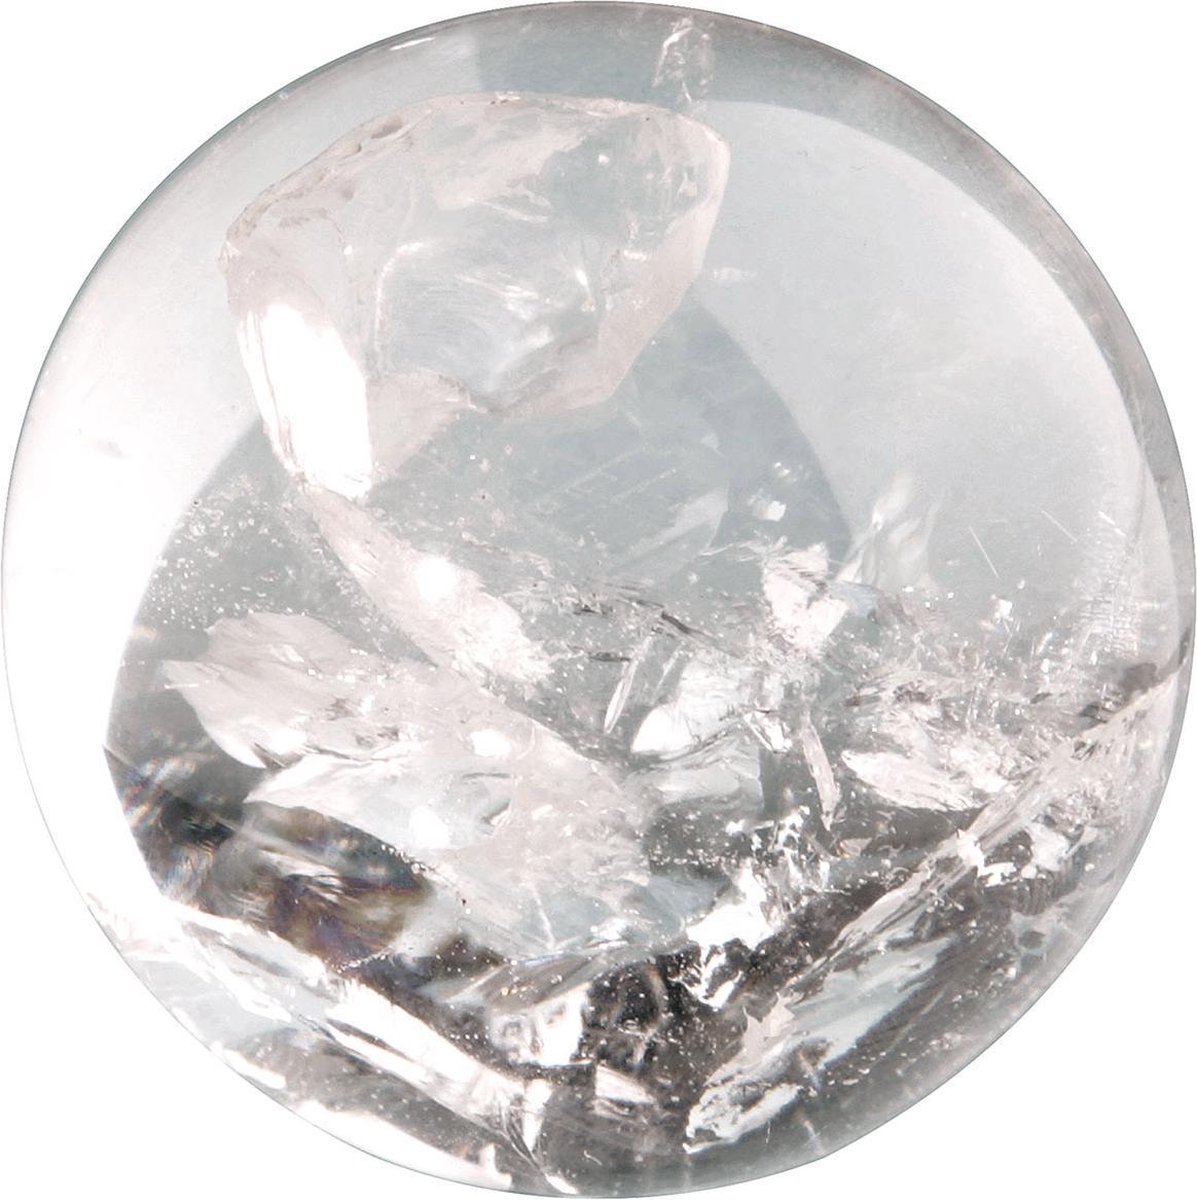 Bol bergkristal 30 mm | bol.com